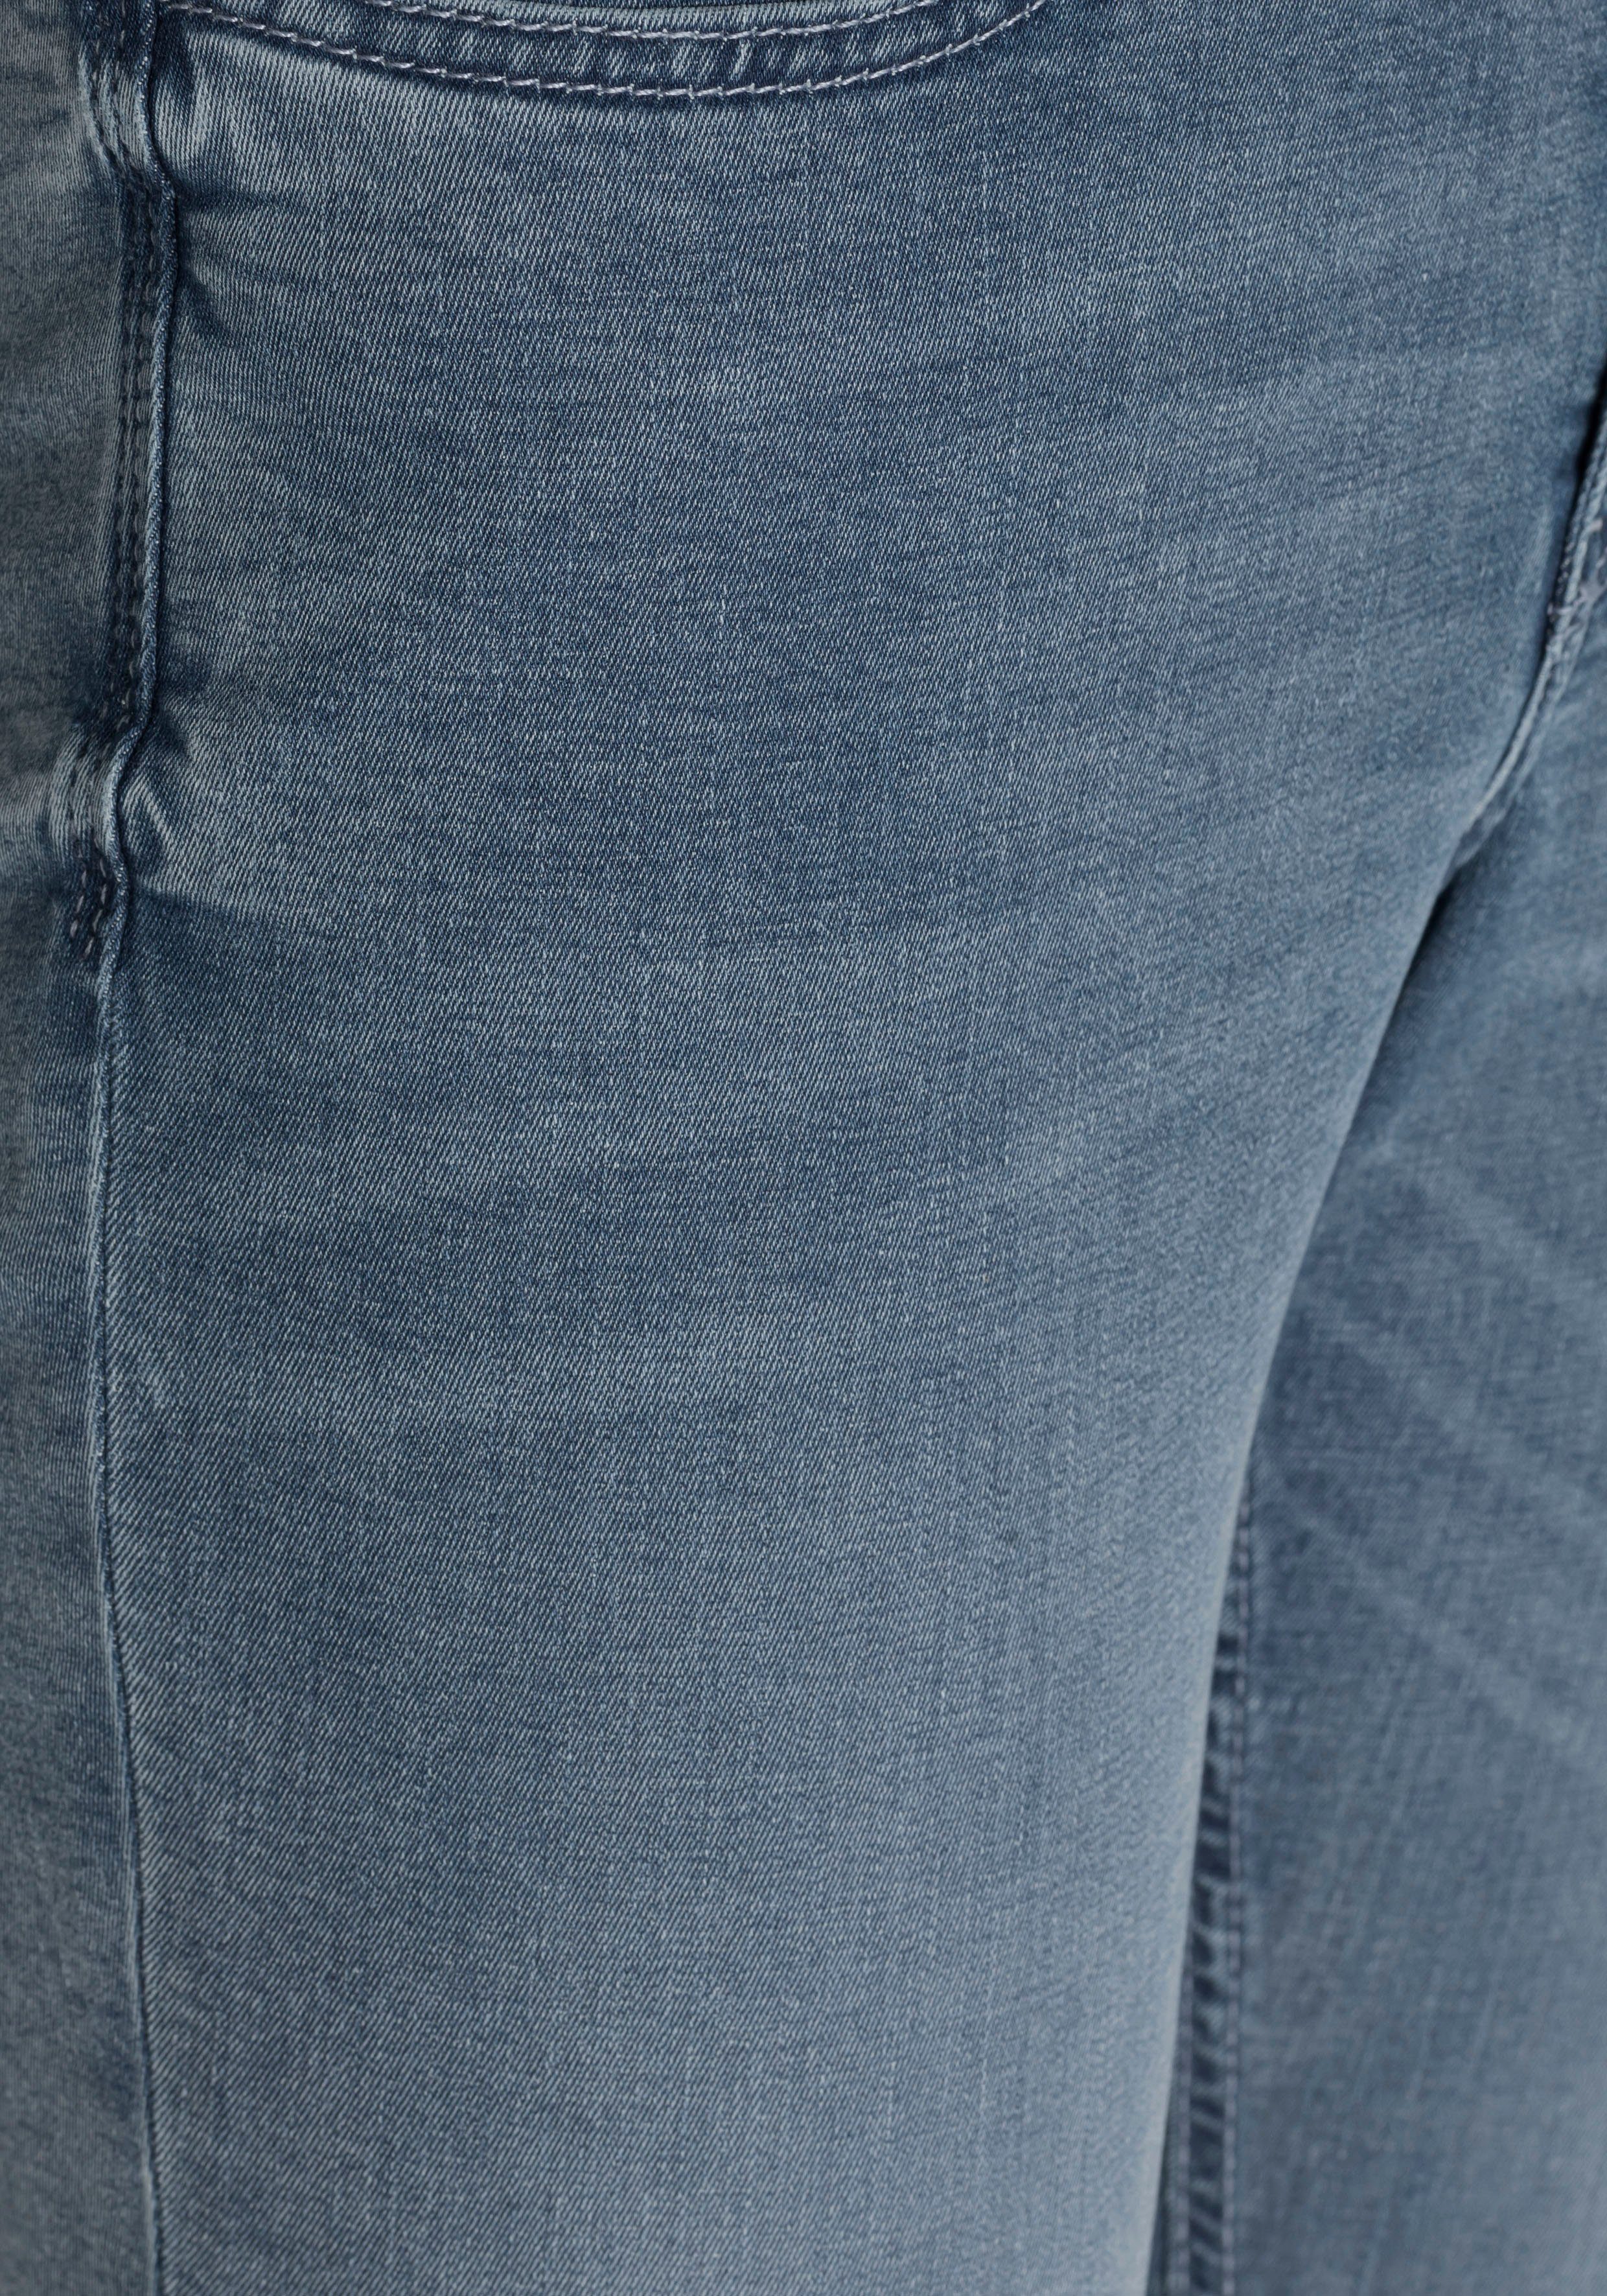 den Qualität Hiperstretch-Skinny random light ganzen bequem Tag Power-Stretch MAC sitzt blue wash Skinny-fit-Jeans